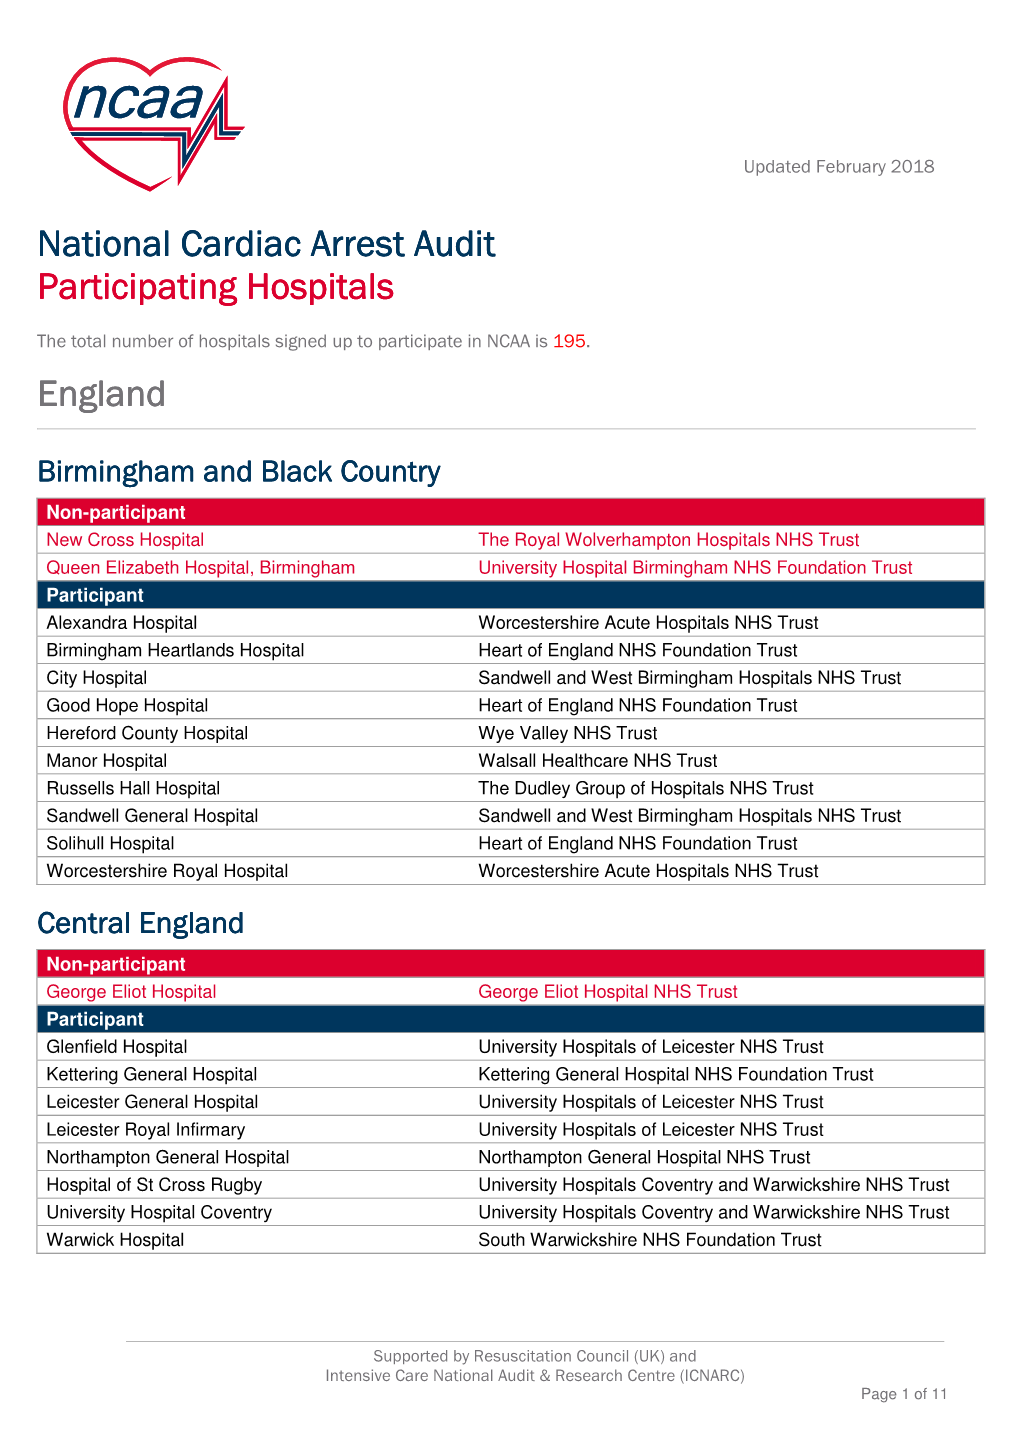 National Cardiac Arrest Audit National Cardiac Arrest Audit